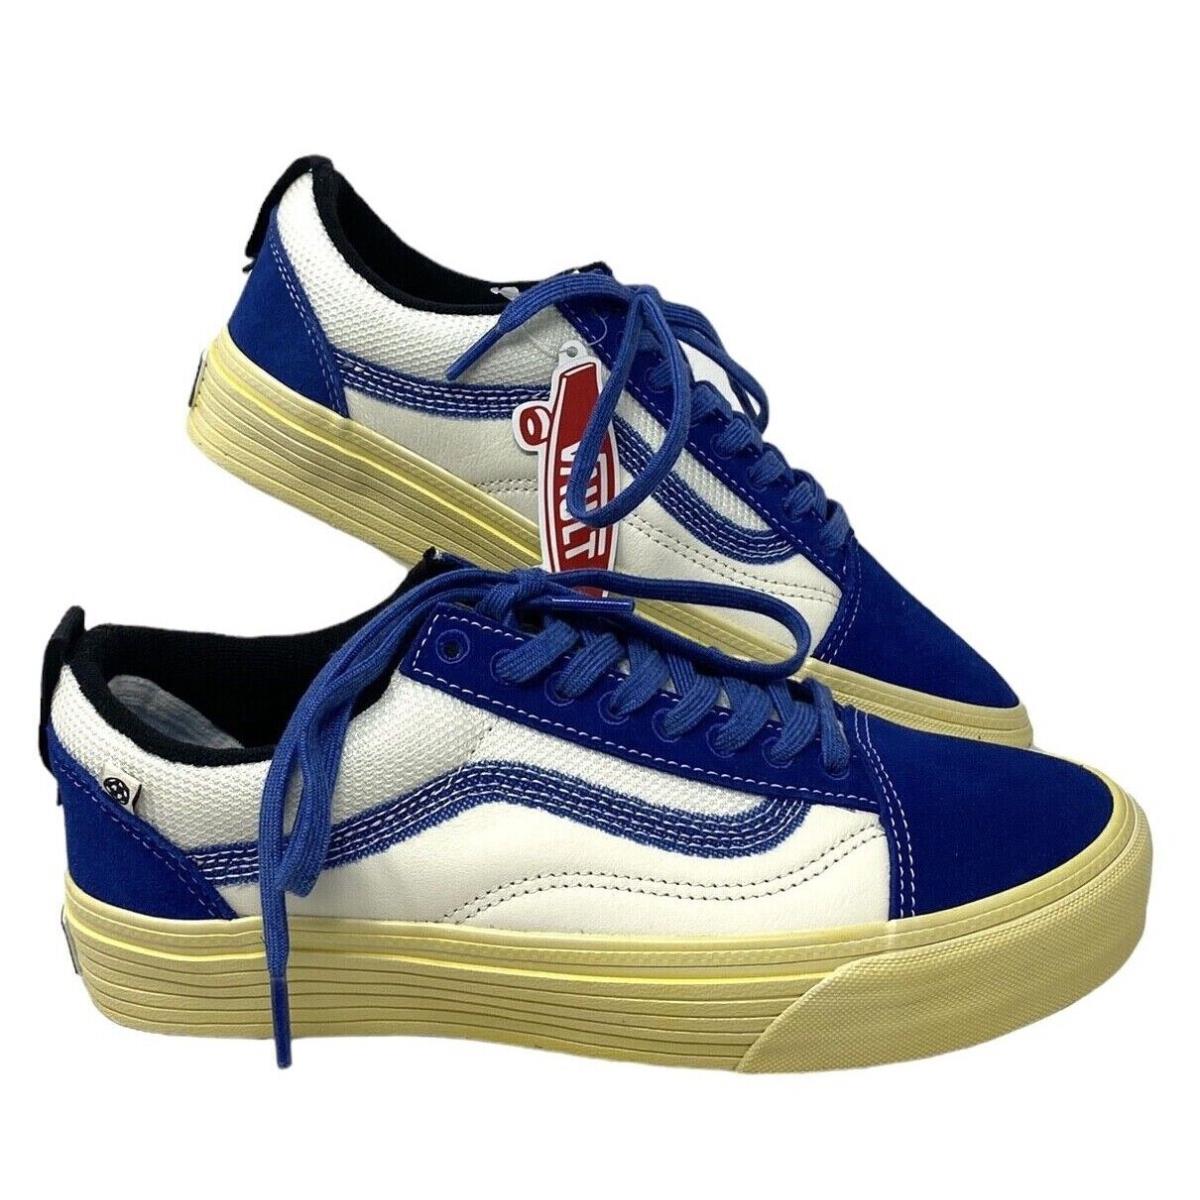 Vans Old Skool Split VR3 Low Top Shoes For Women Suede Blue White VN0A5FBGFUH